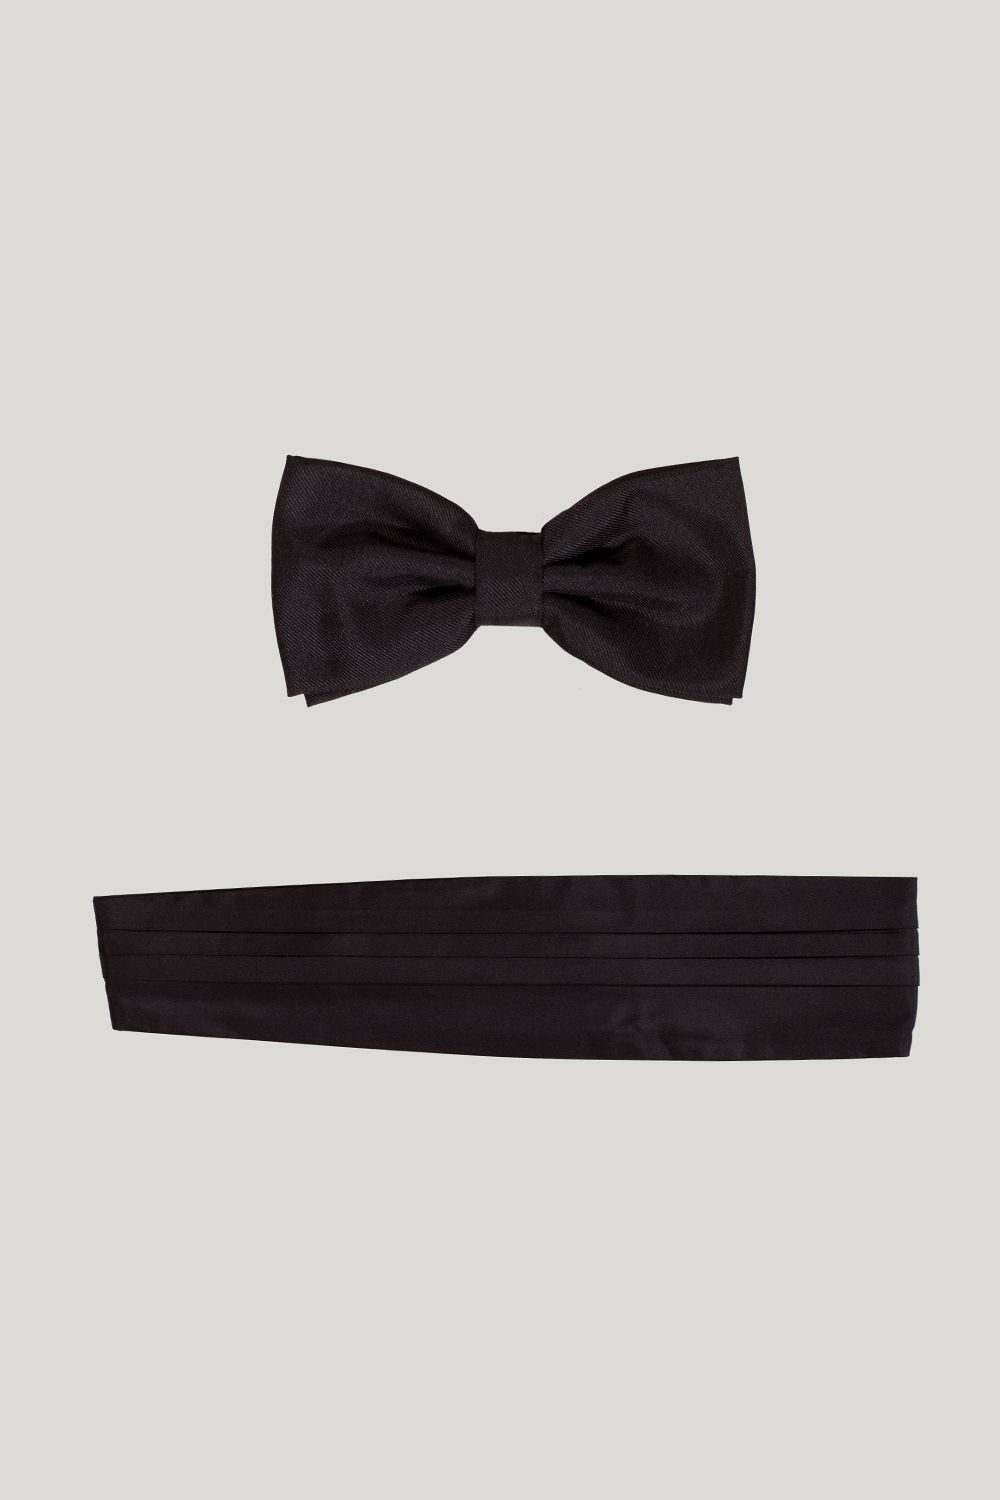 R. Hanauer Black Gold Bow Tie Woven Print Cummerbund Set 100% Silk Made ...